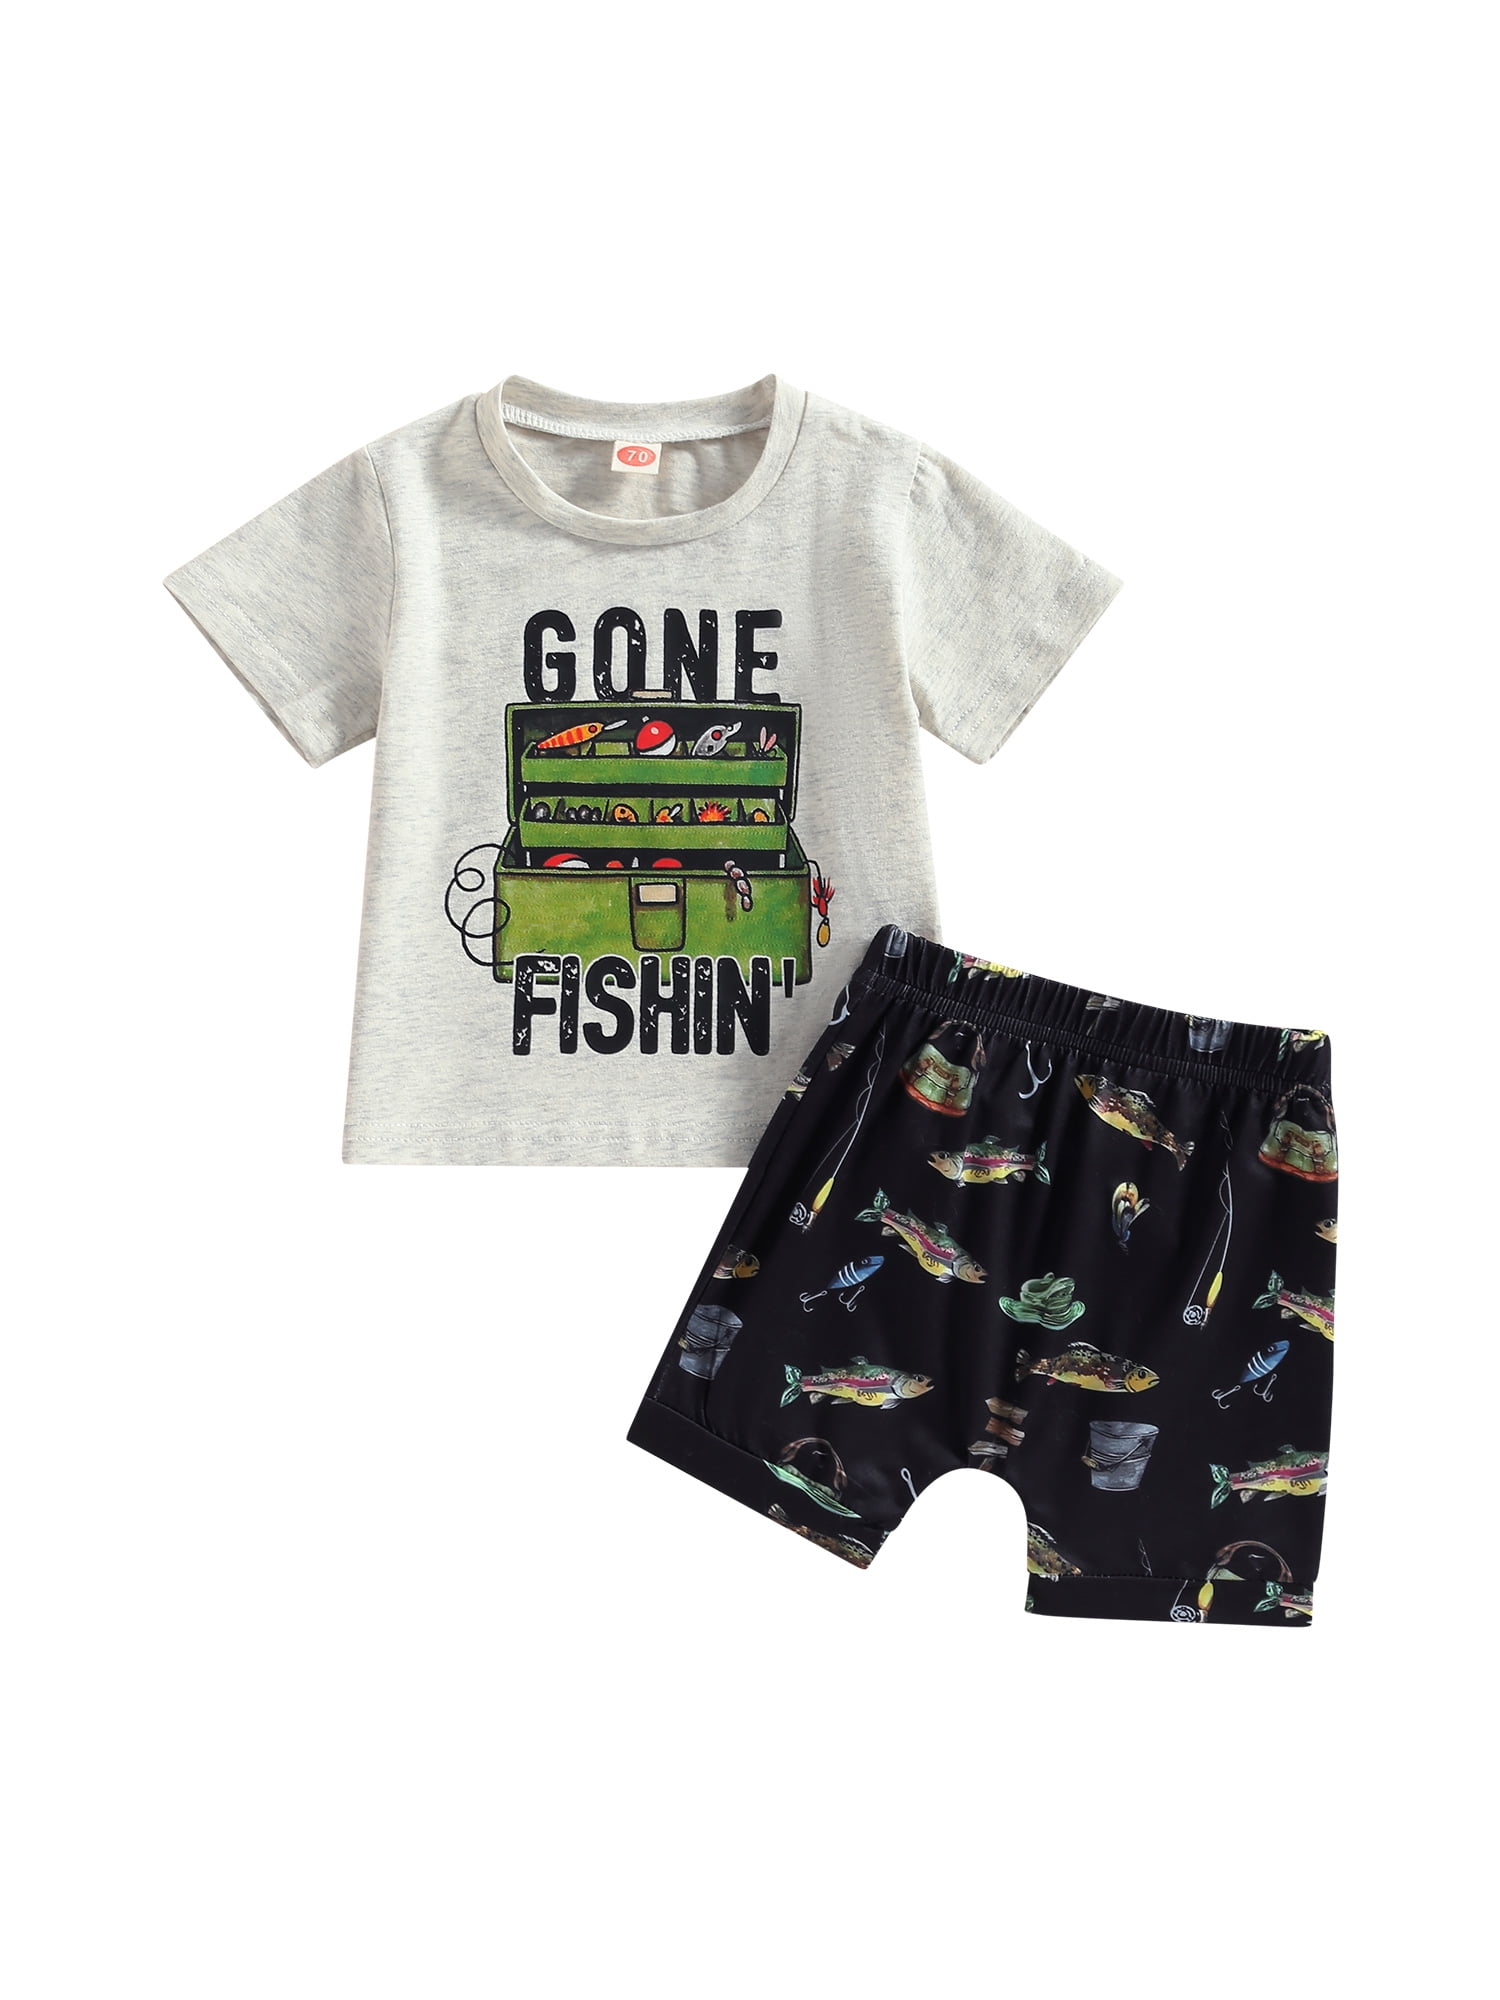 Newborn Infant Baby Boy Girl Summer Clothes Short Sleeve Letter T-Shirt  Elastic Waist Shorts Sets Fishing Outfit 2Pcs 